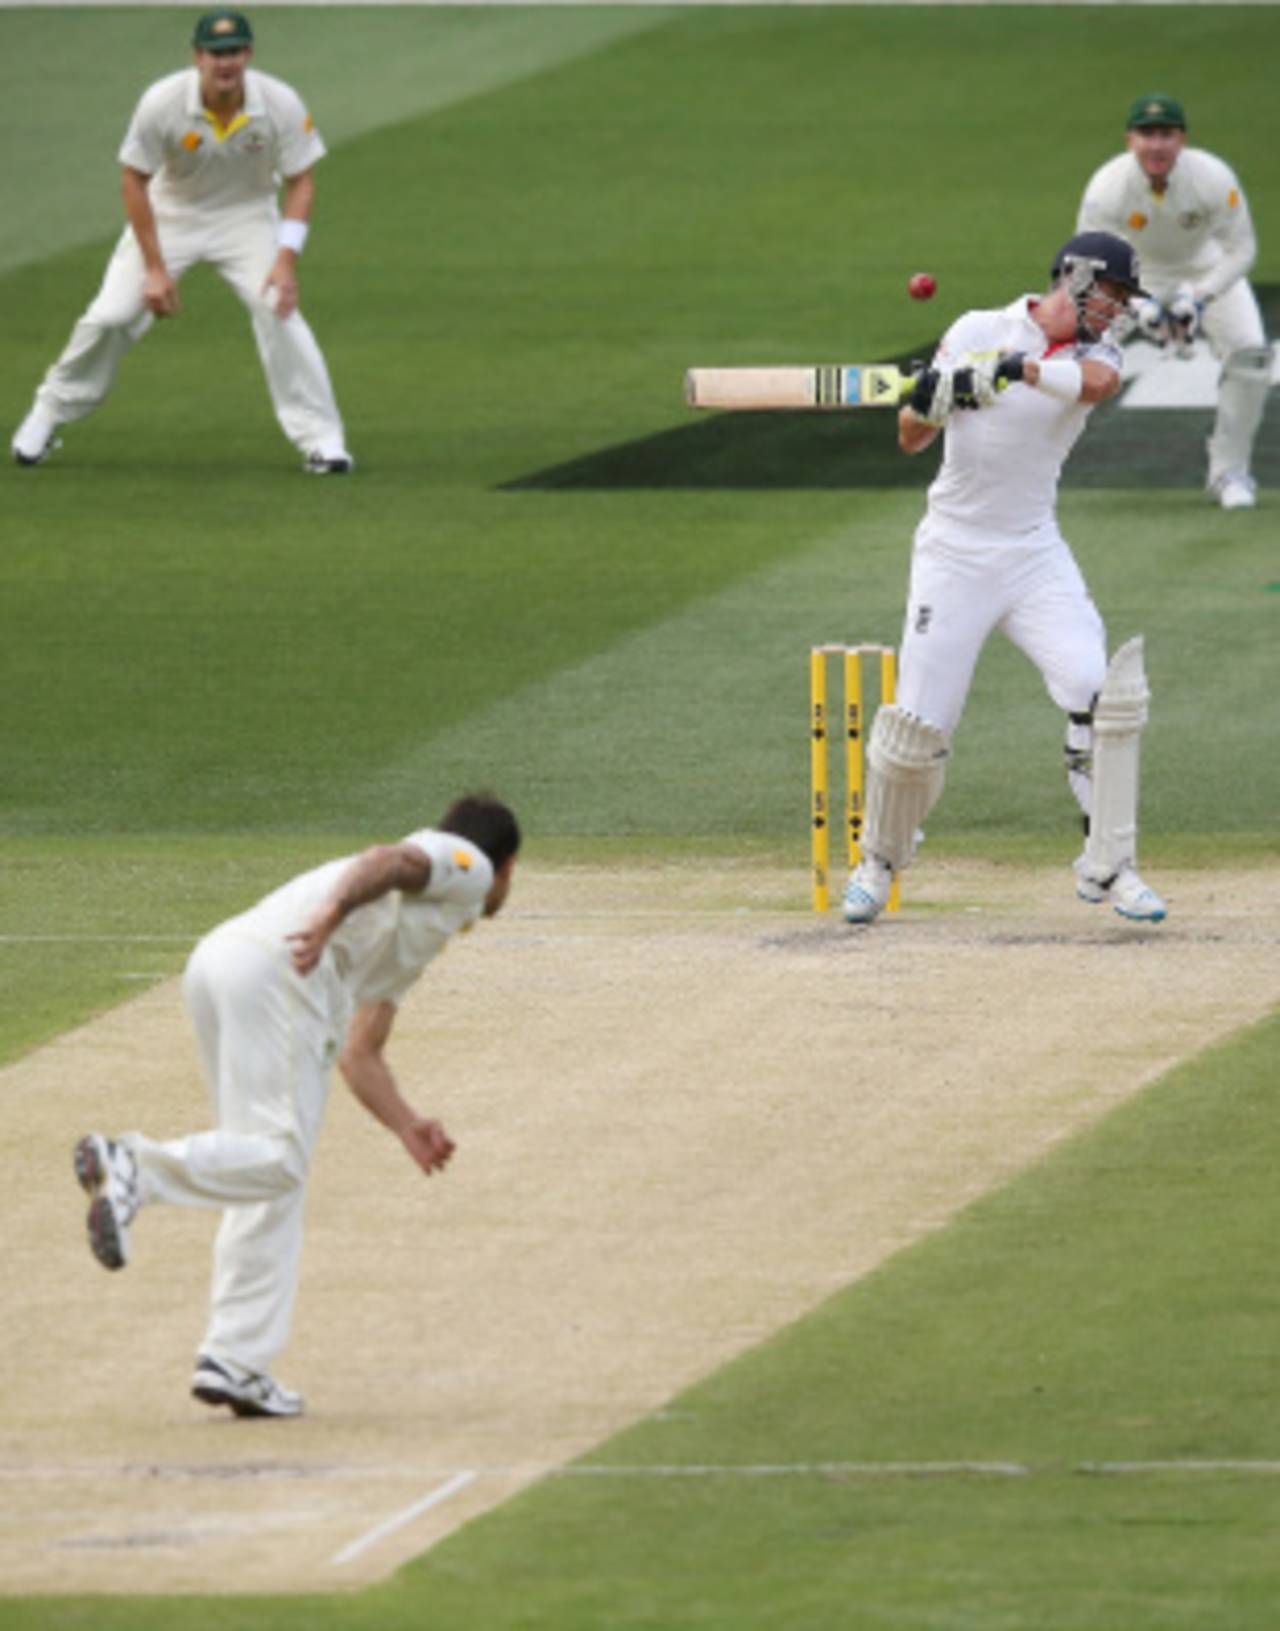 Kevin Pietersen avoids a short ball from Mitchell Johnson, Australia v England, 4th Test, Melbourne, 2nd day, December 27, 2013